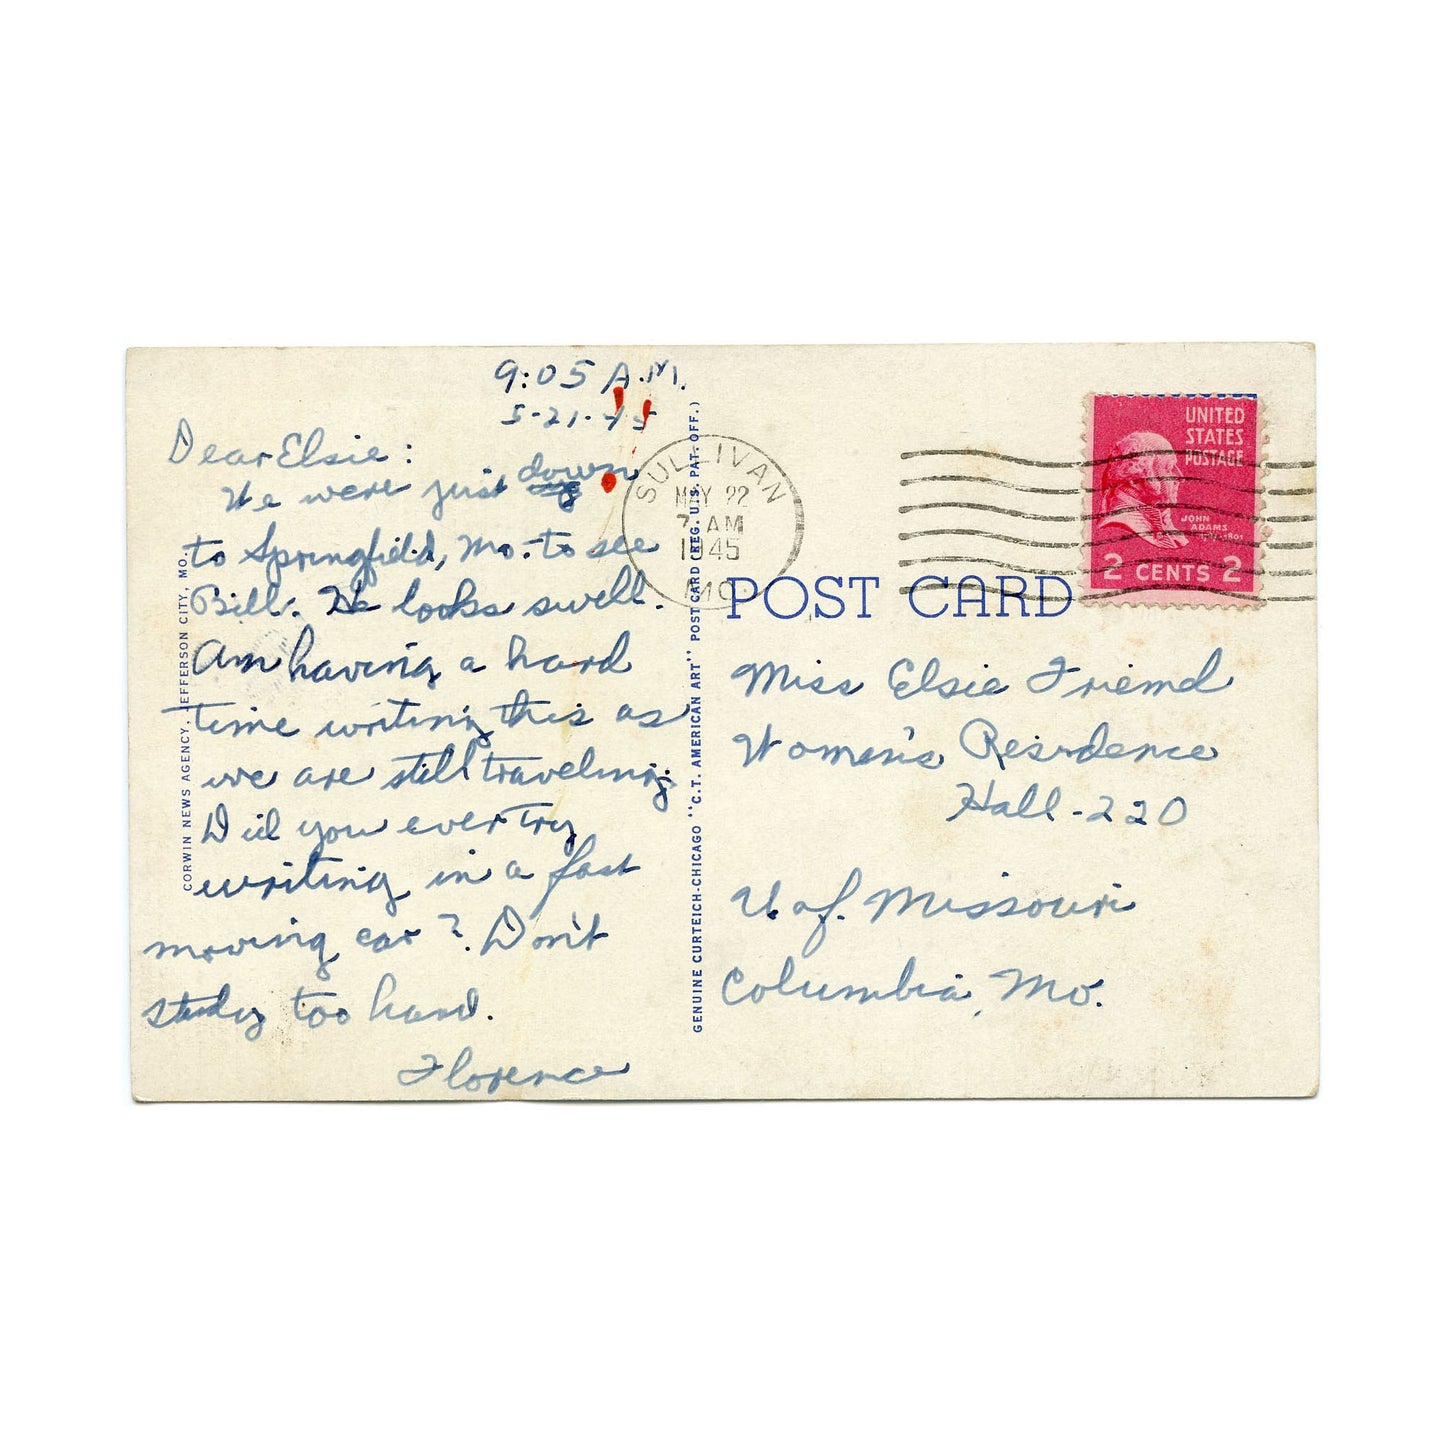 1945 Postcard MO High School & Post Office Rolla MO